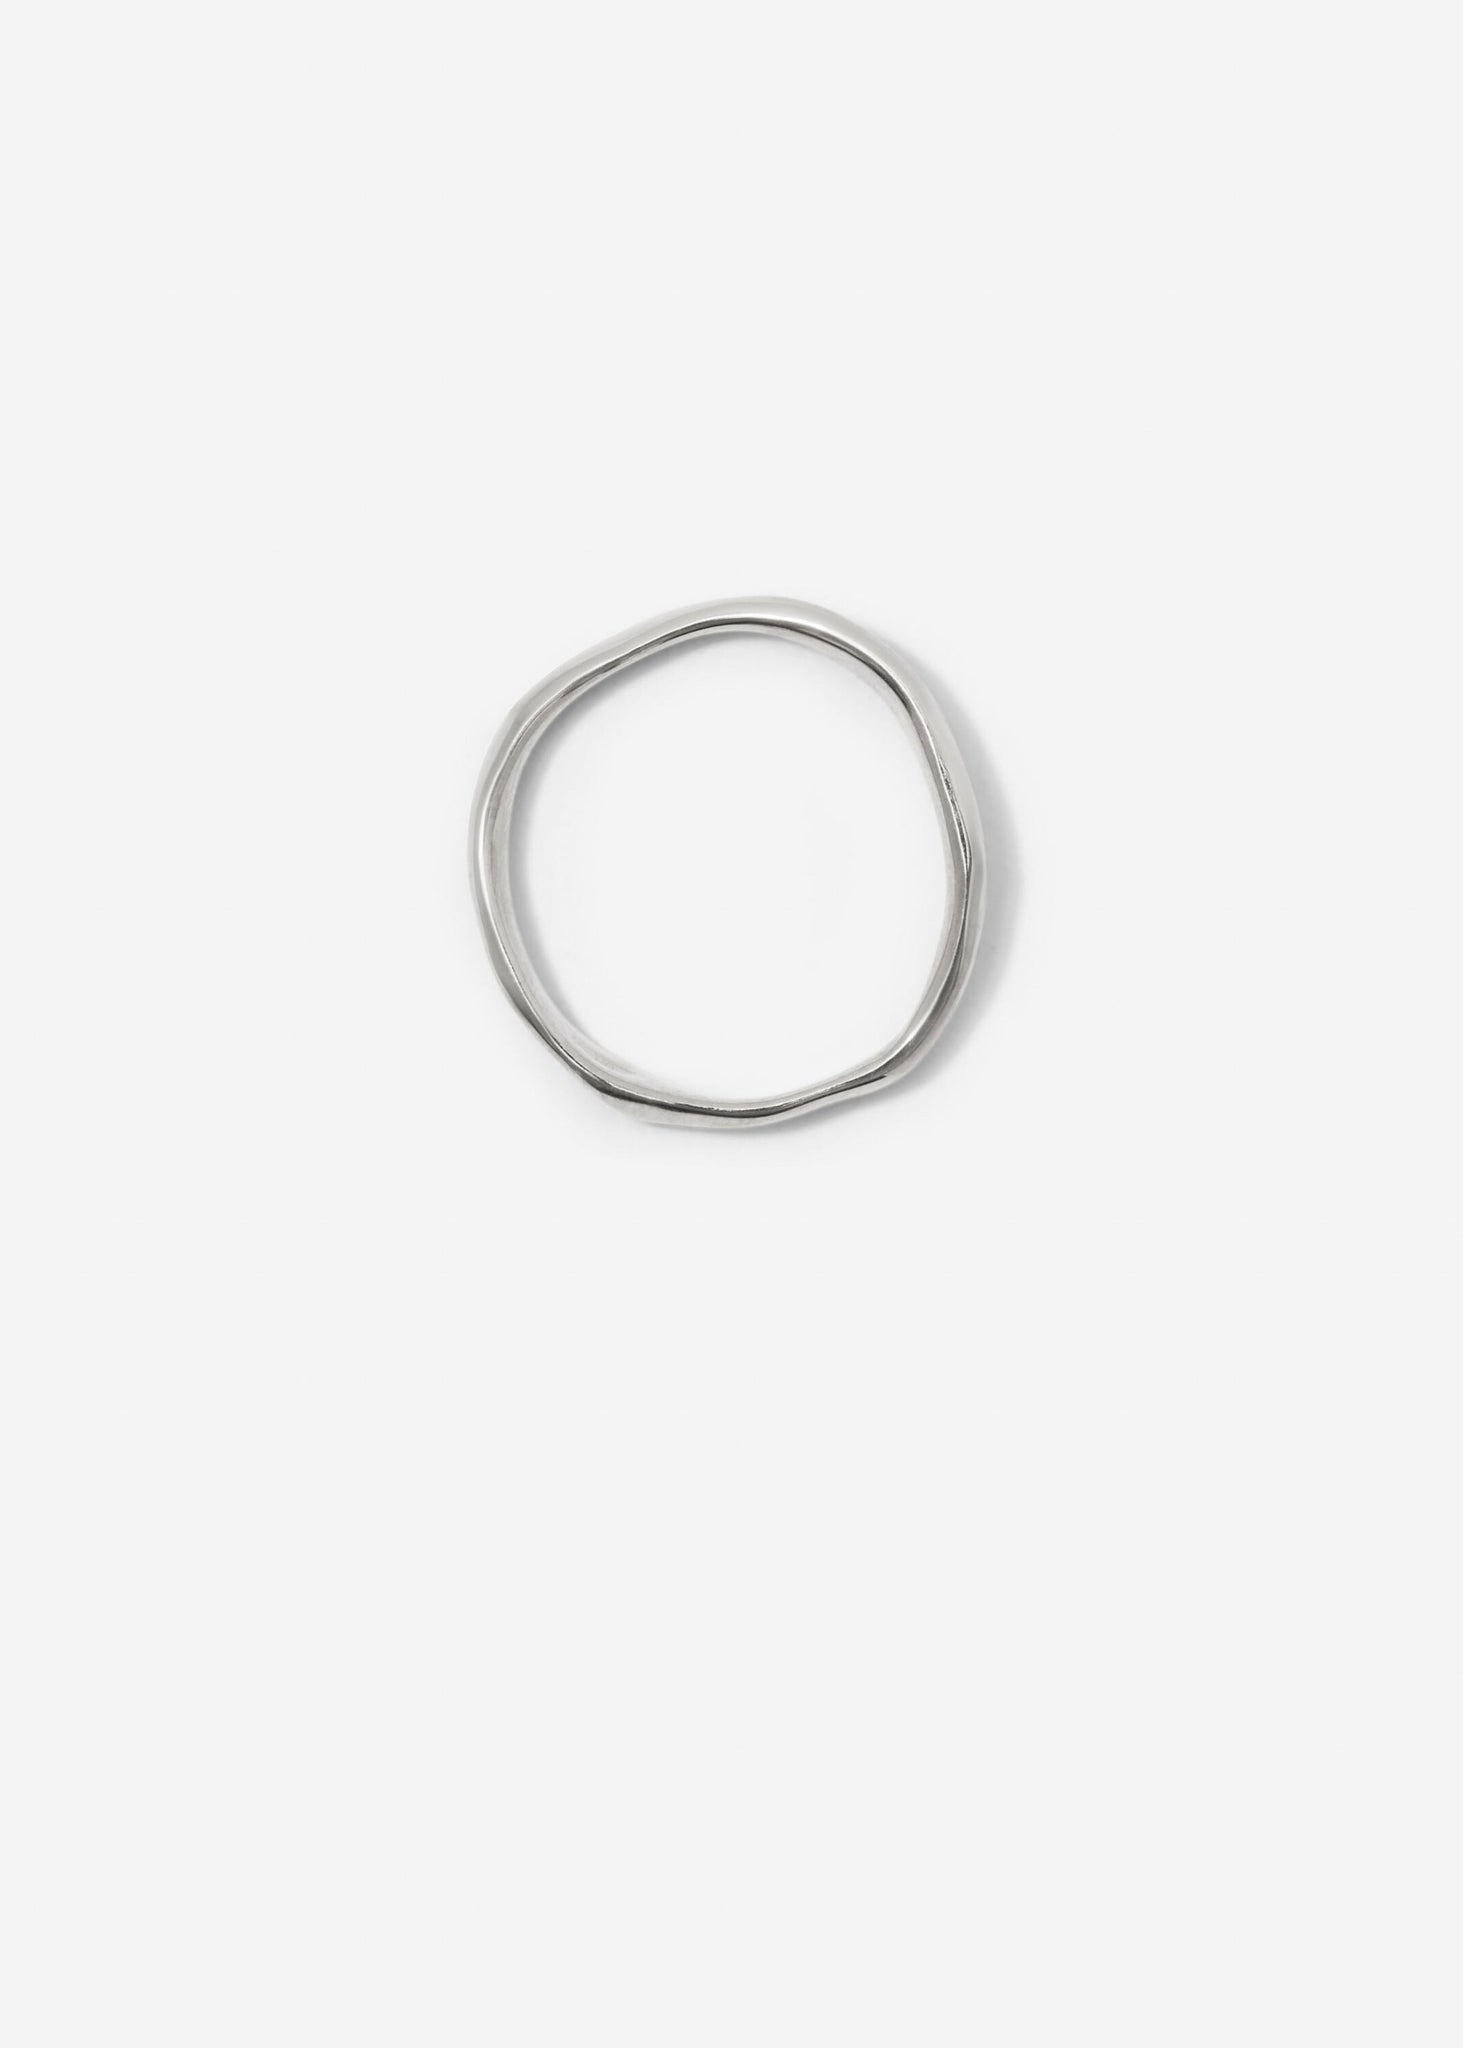 Organic Band - Rings - Customised - 2